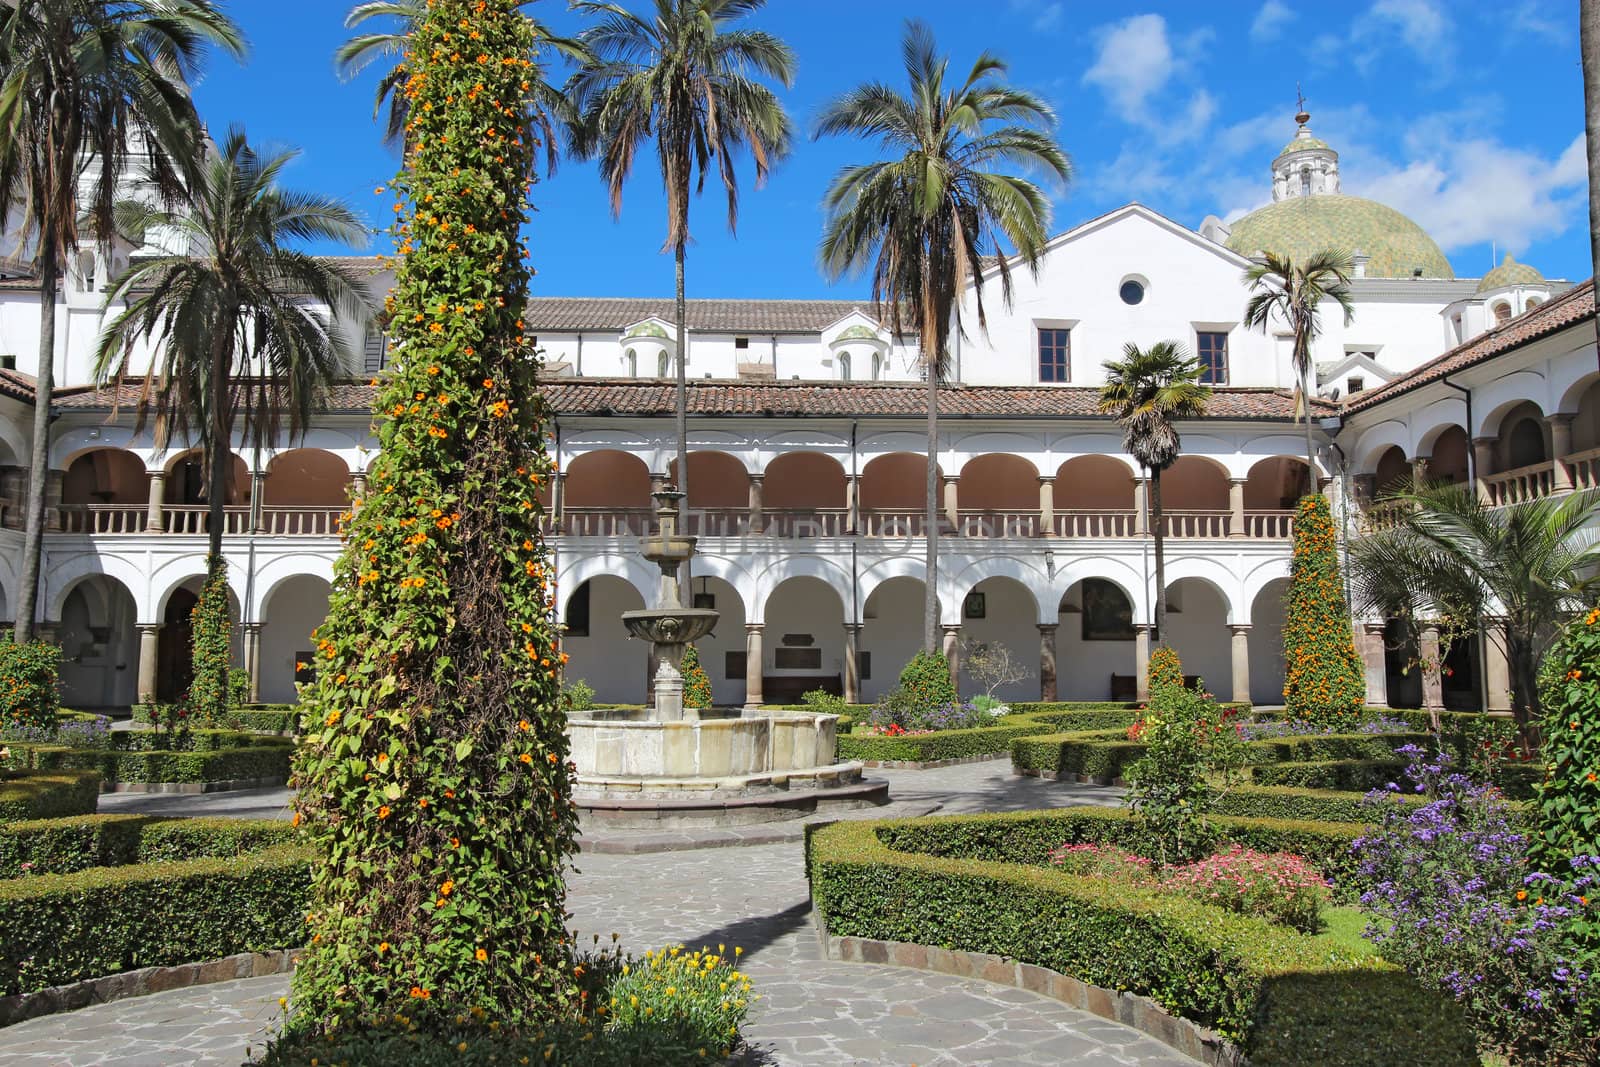 Courtyard at the church of San Francisco in Quito, Ecuador by sgoodwin4813